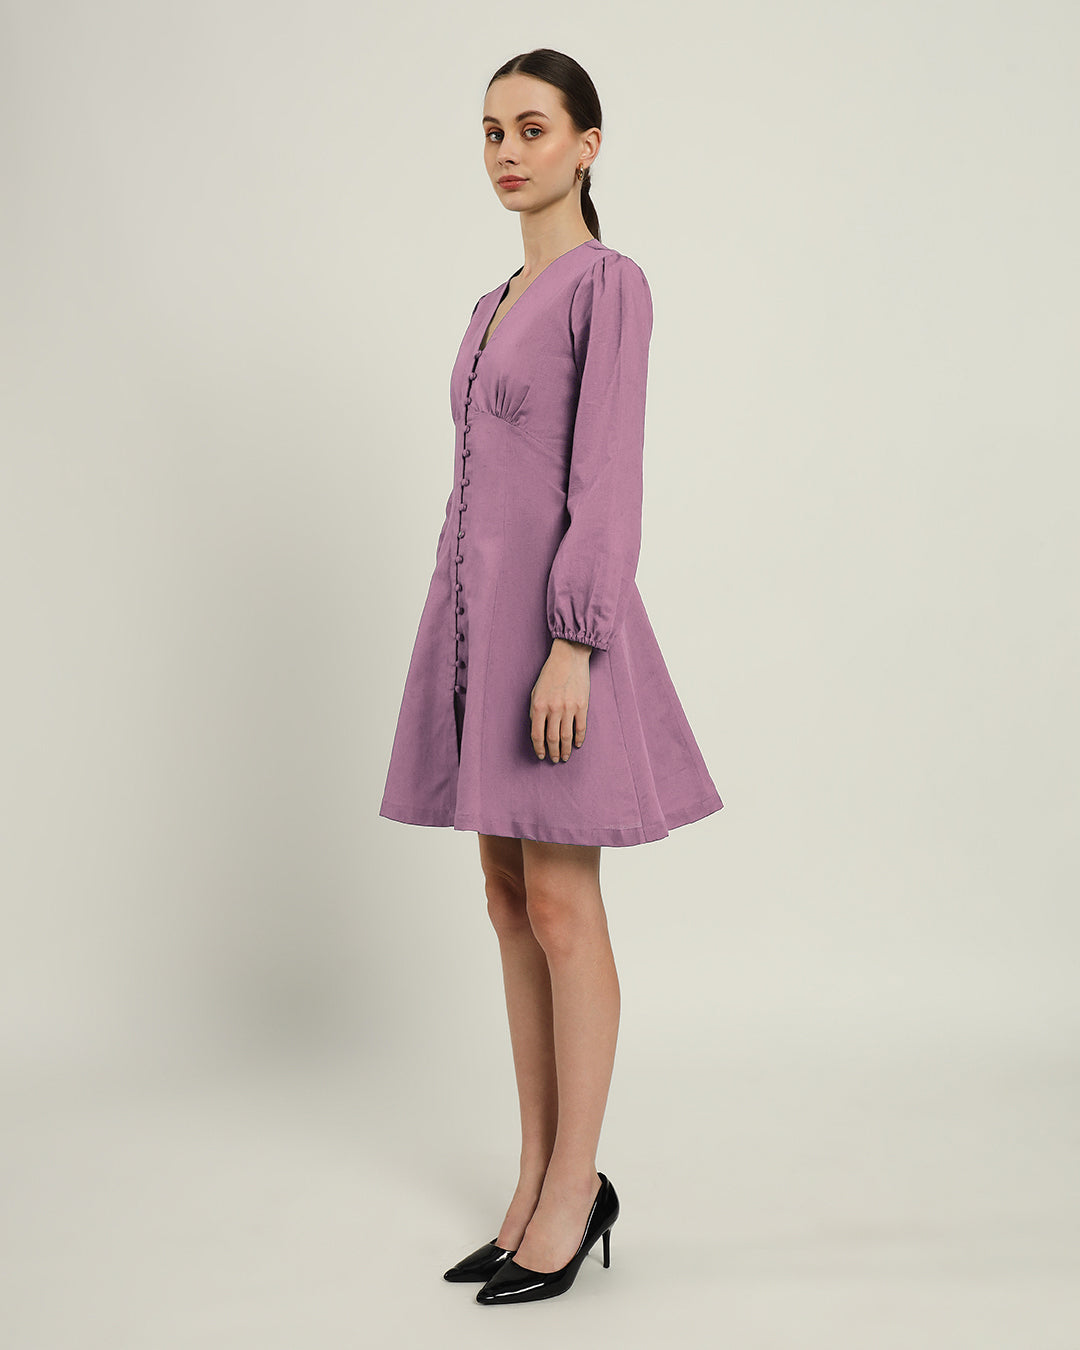 The Dafni Purple Swirl Cotton Dress